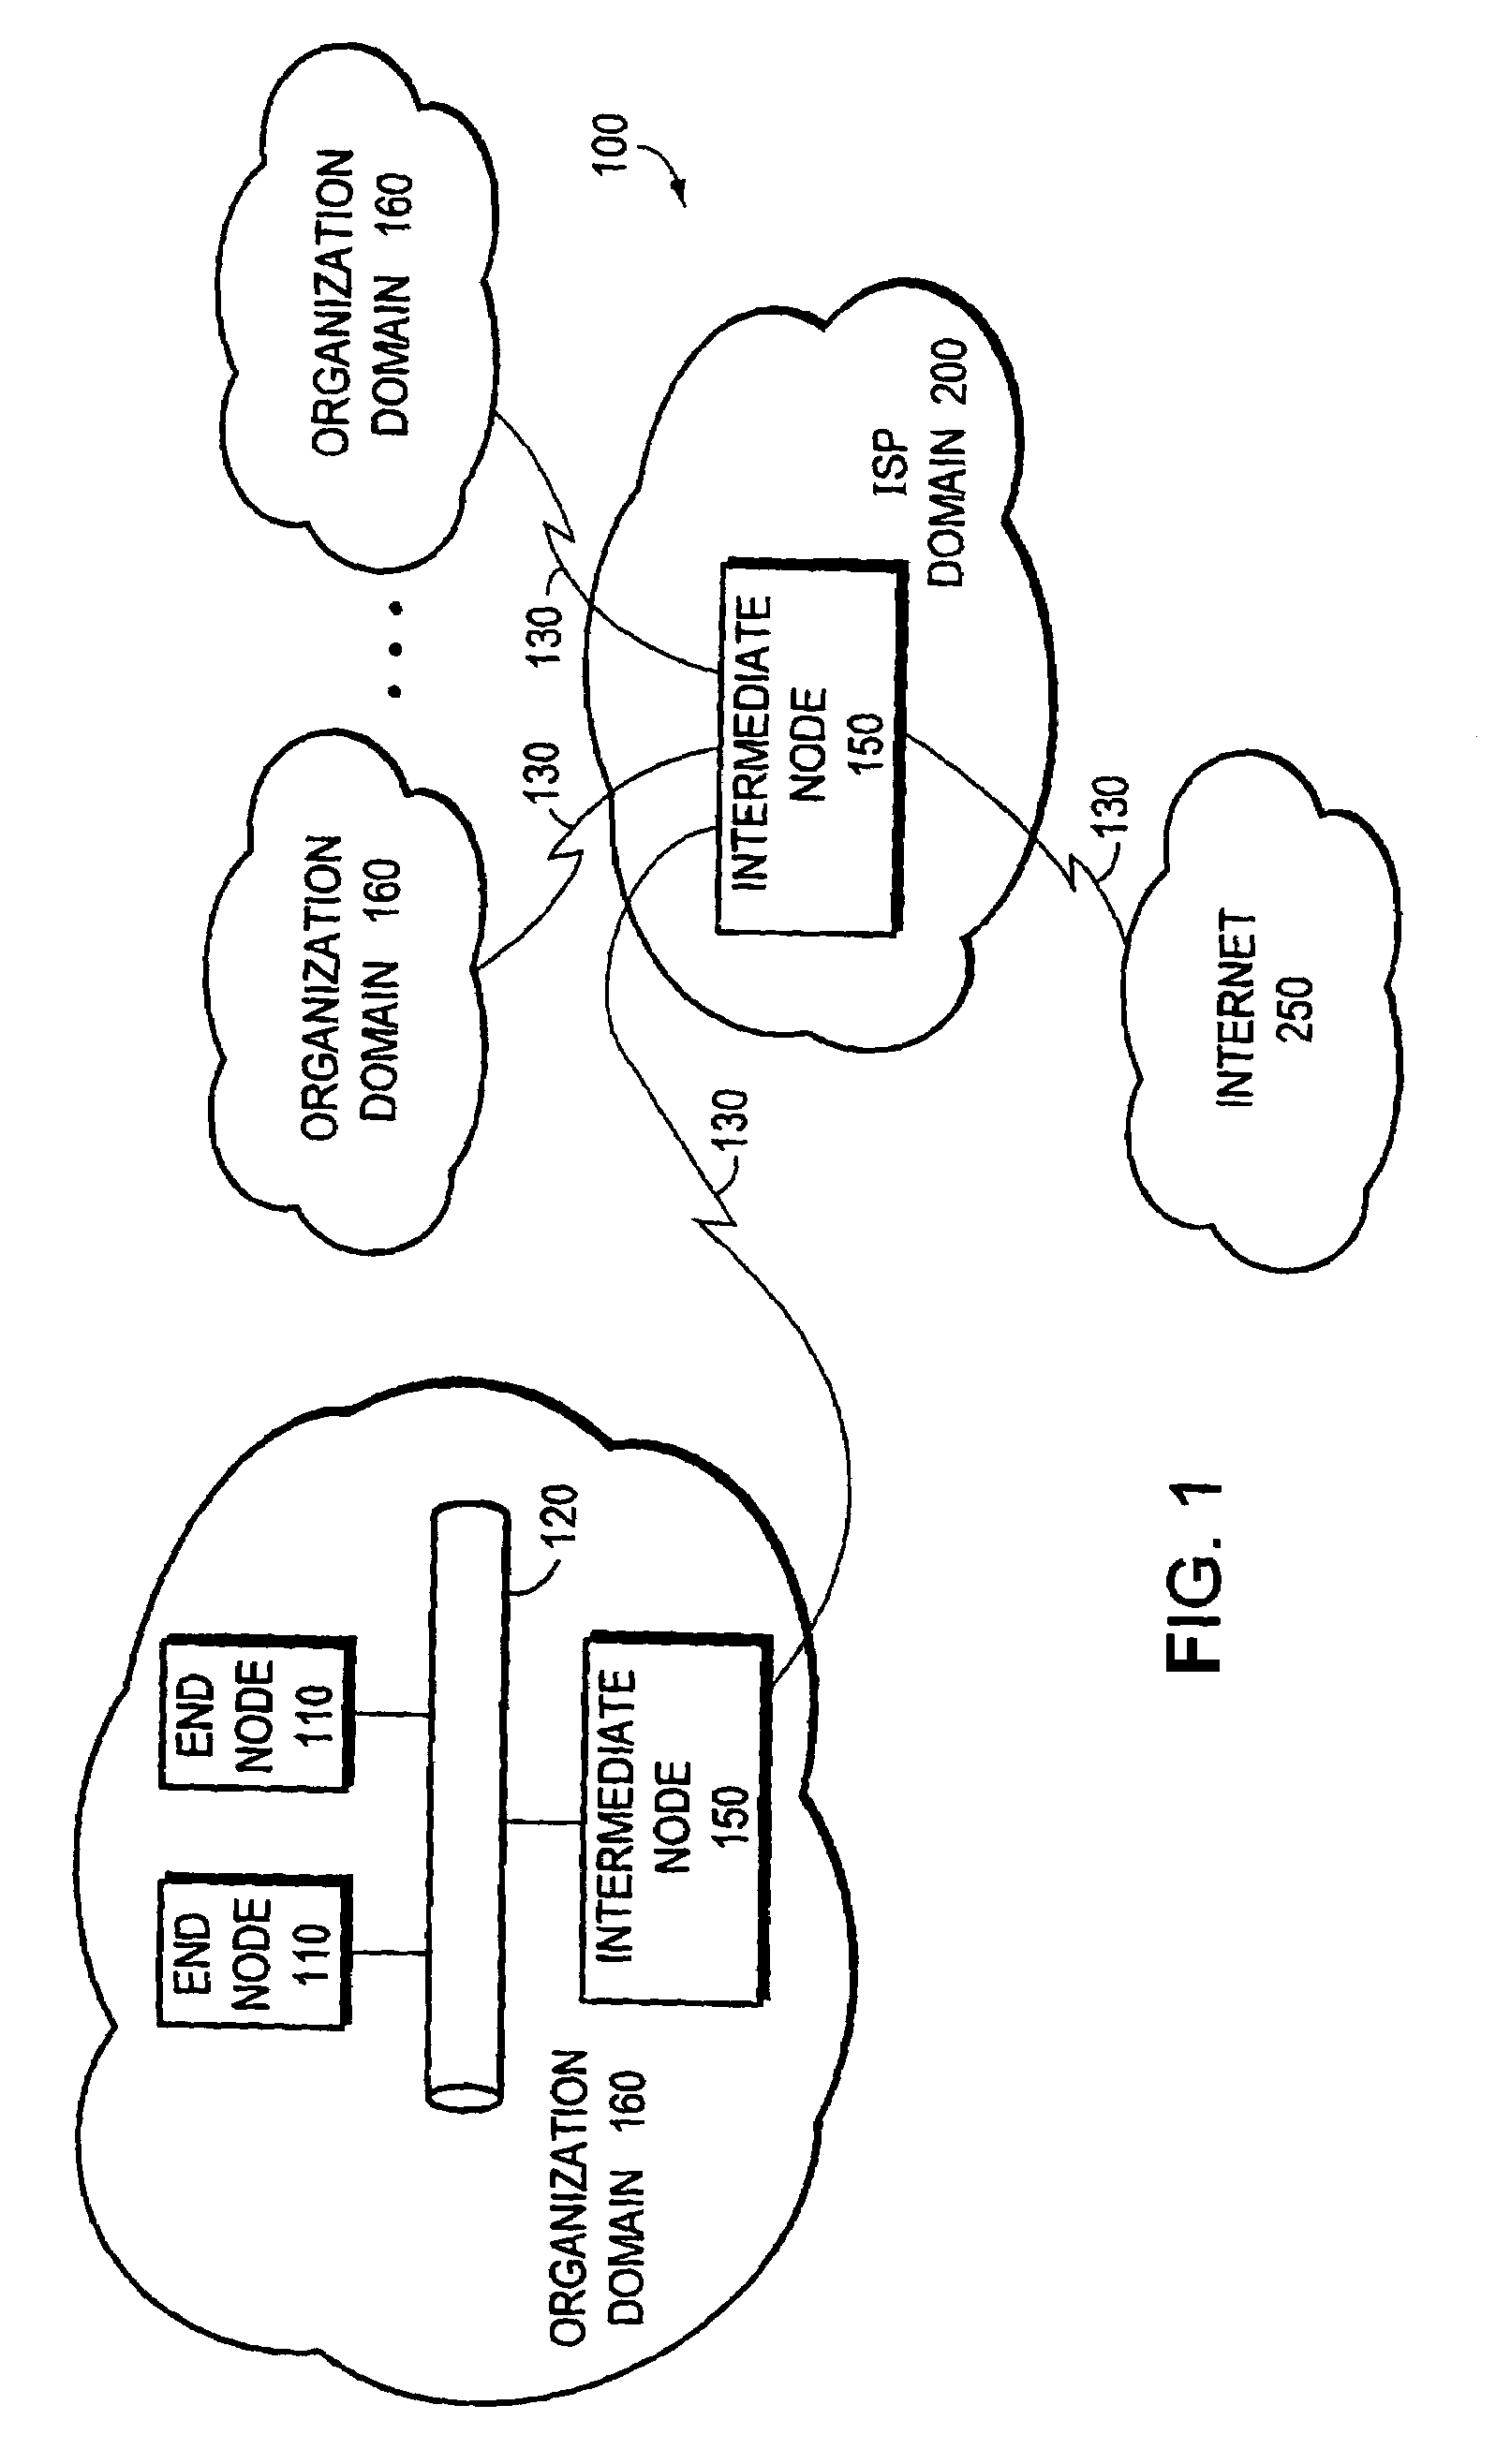 High performance interface logic architecture of an intermediate network node